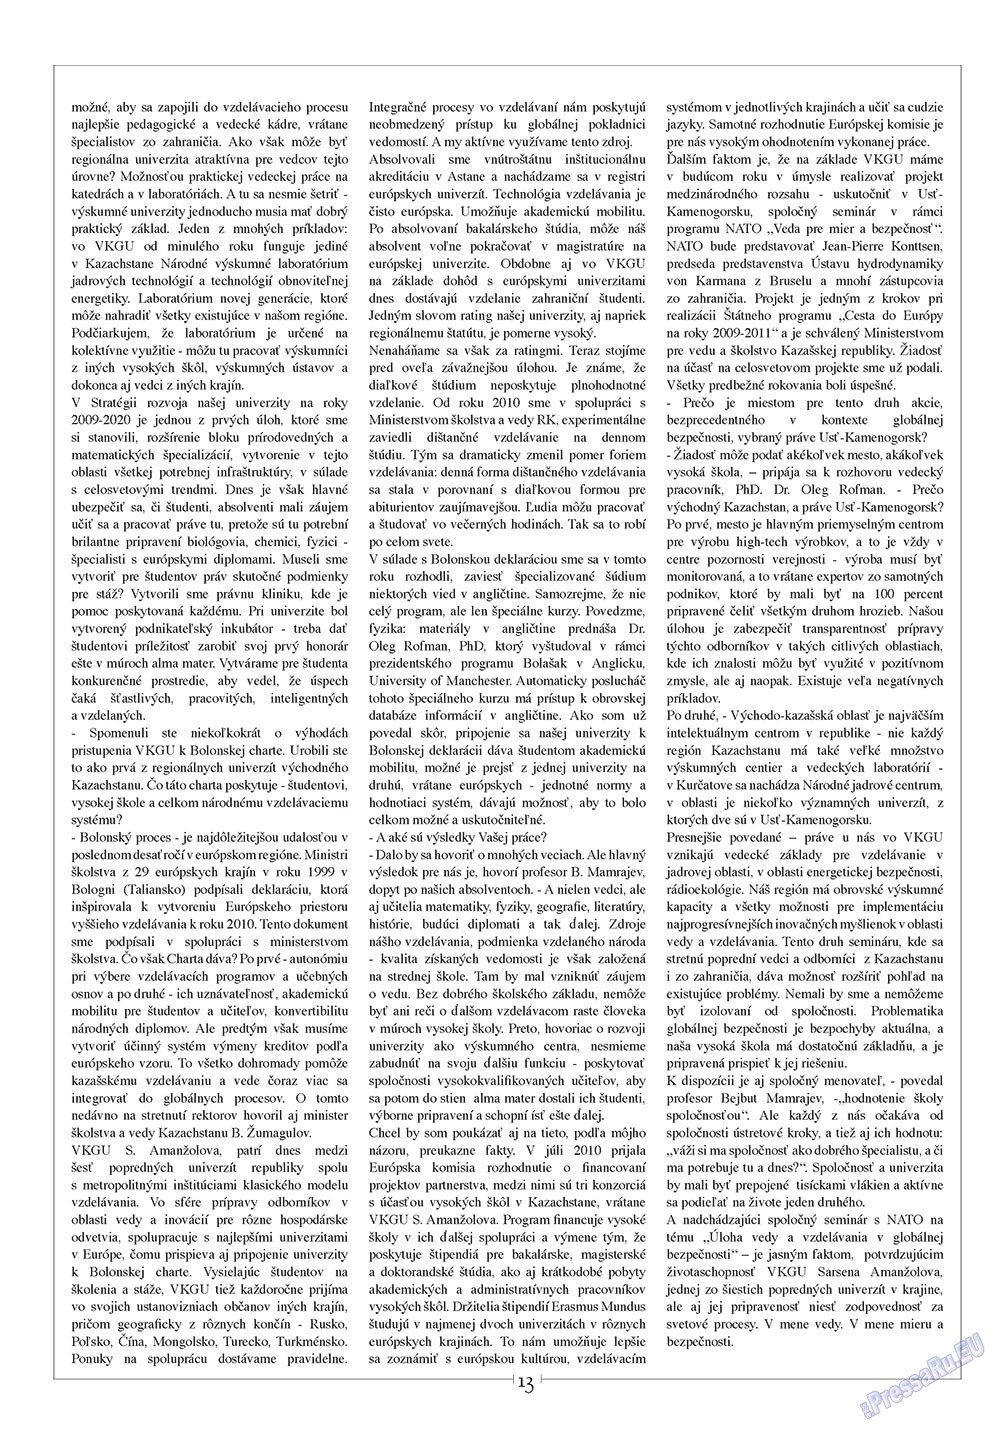 Европейский меридиан (журнал). 2010 год, номер 4, стр. 13